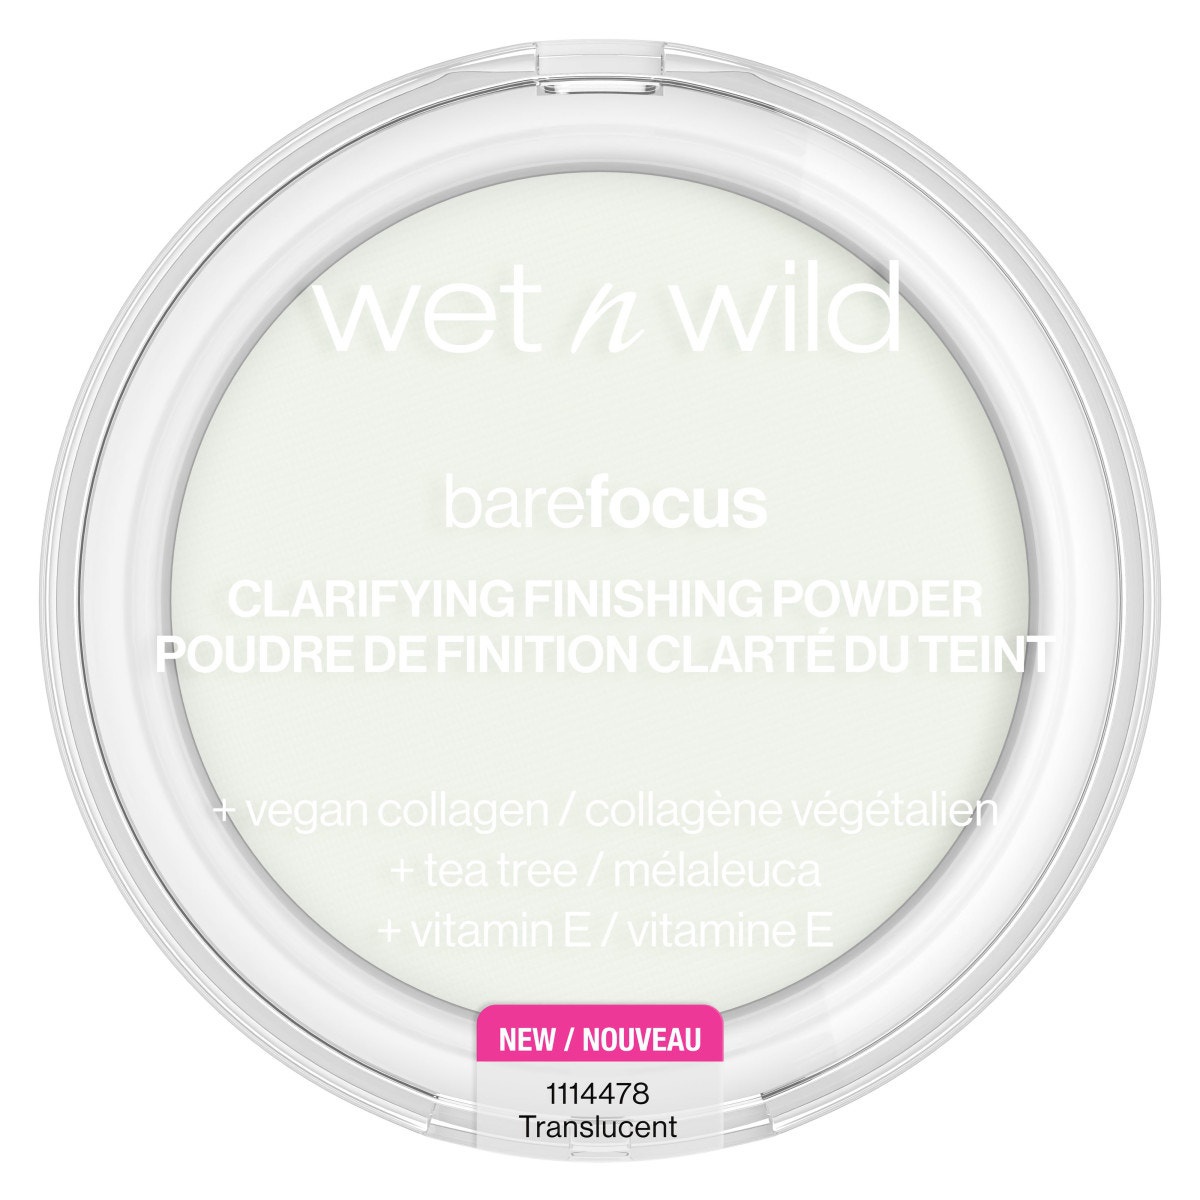 Wet n Wild Bare Focus Clarifying Finishing Powder - Translucent